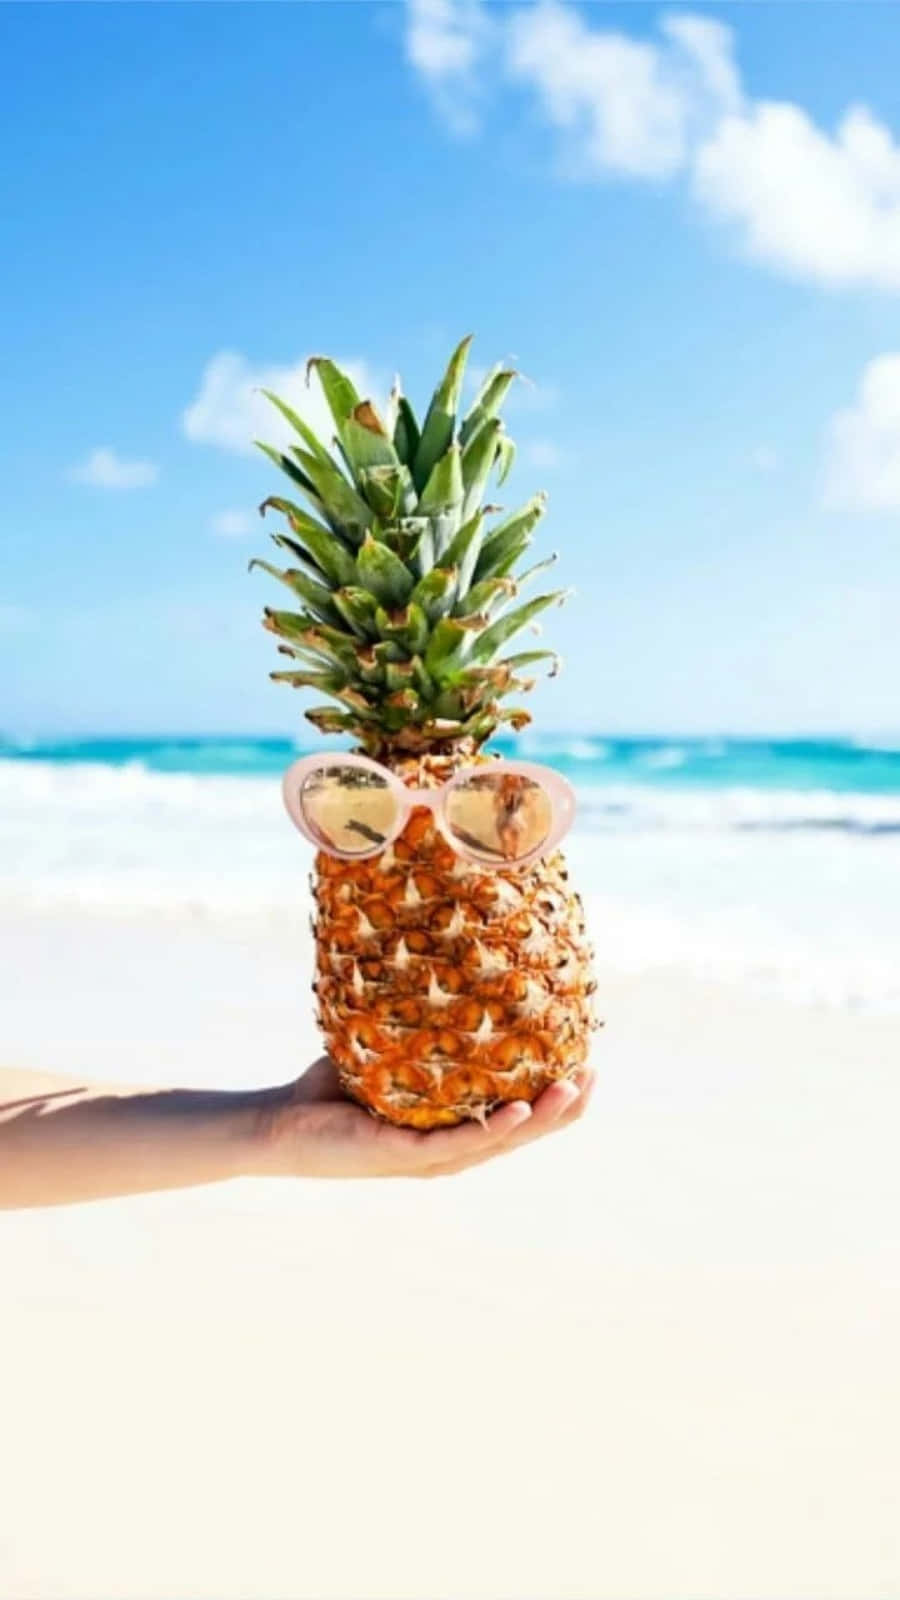 Enjoy the sweet taste of summer with a juicy pineapple.